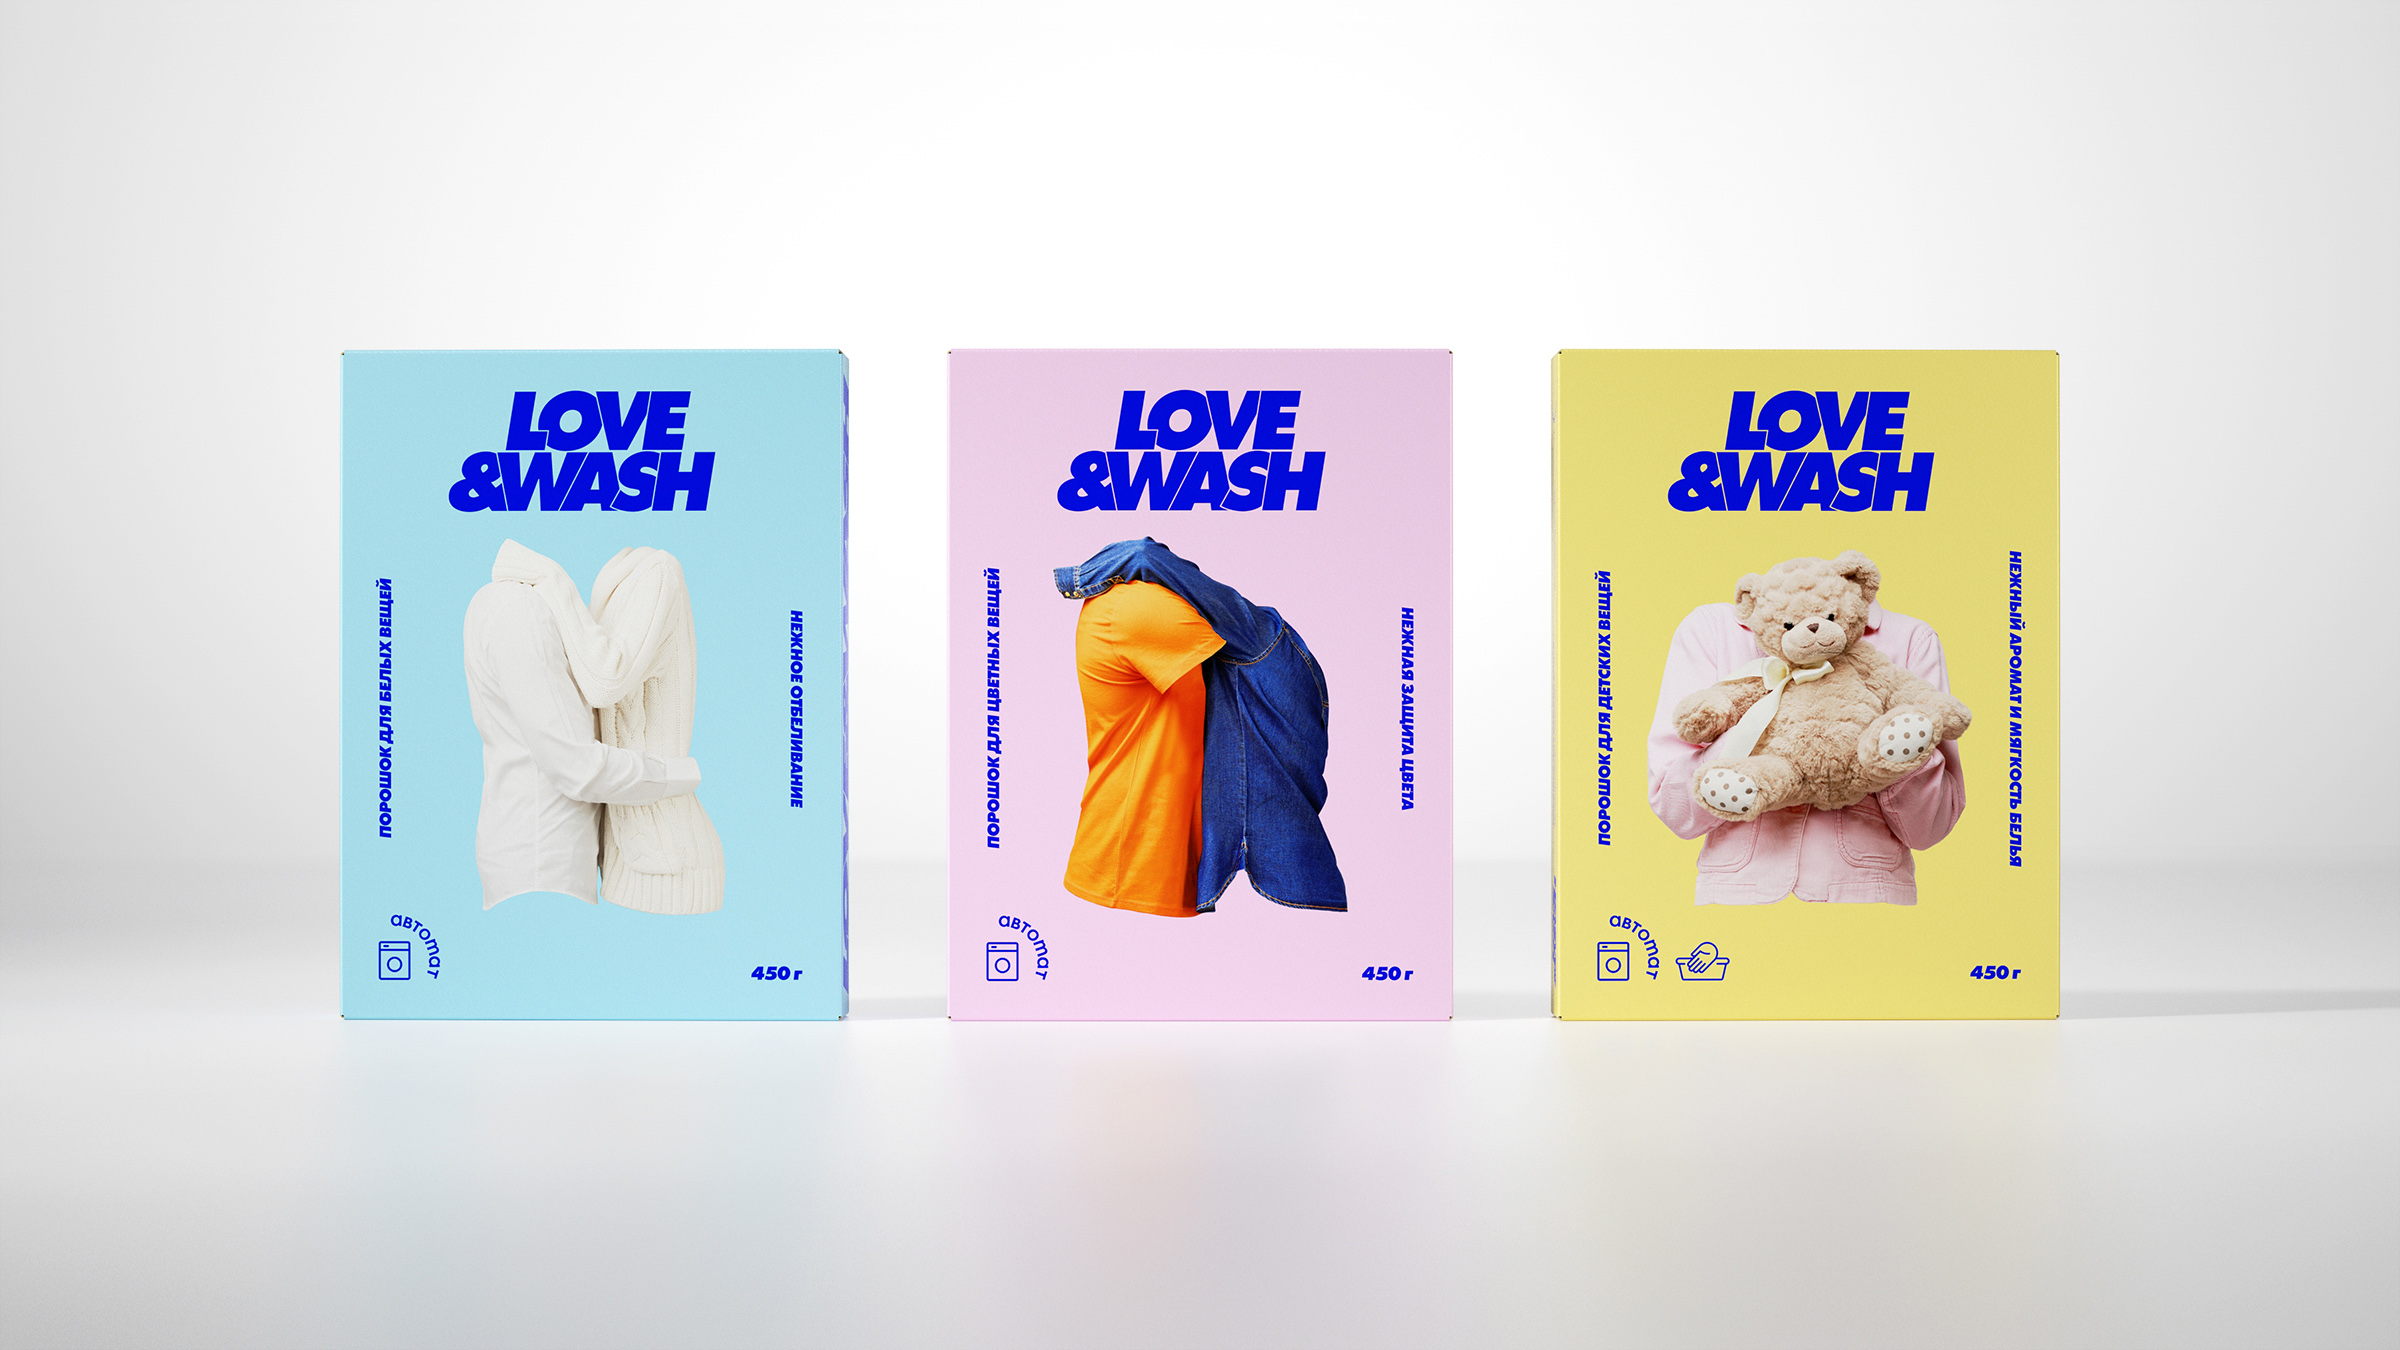 Cherkasov Design – Love&wash Brand for Washing Clothes